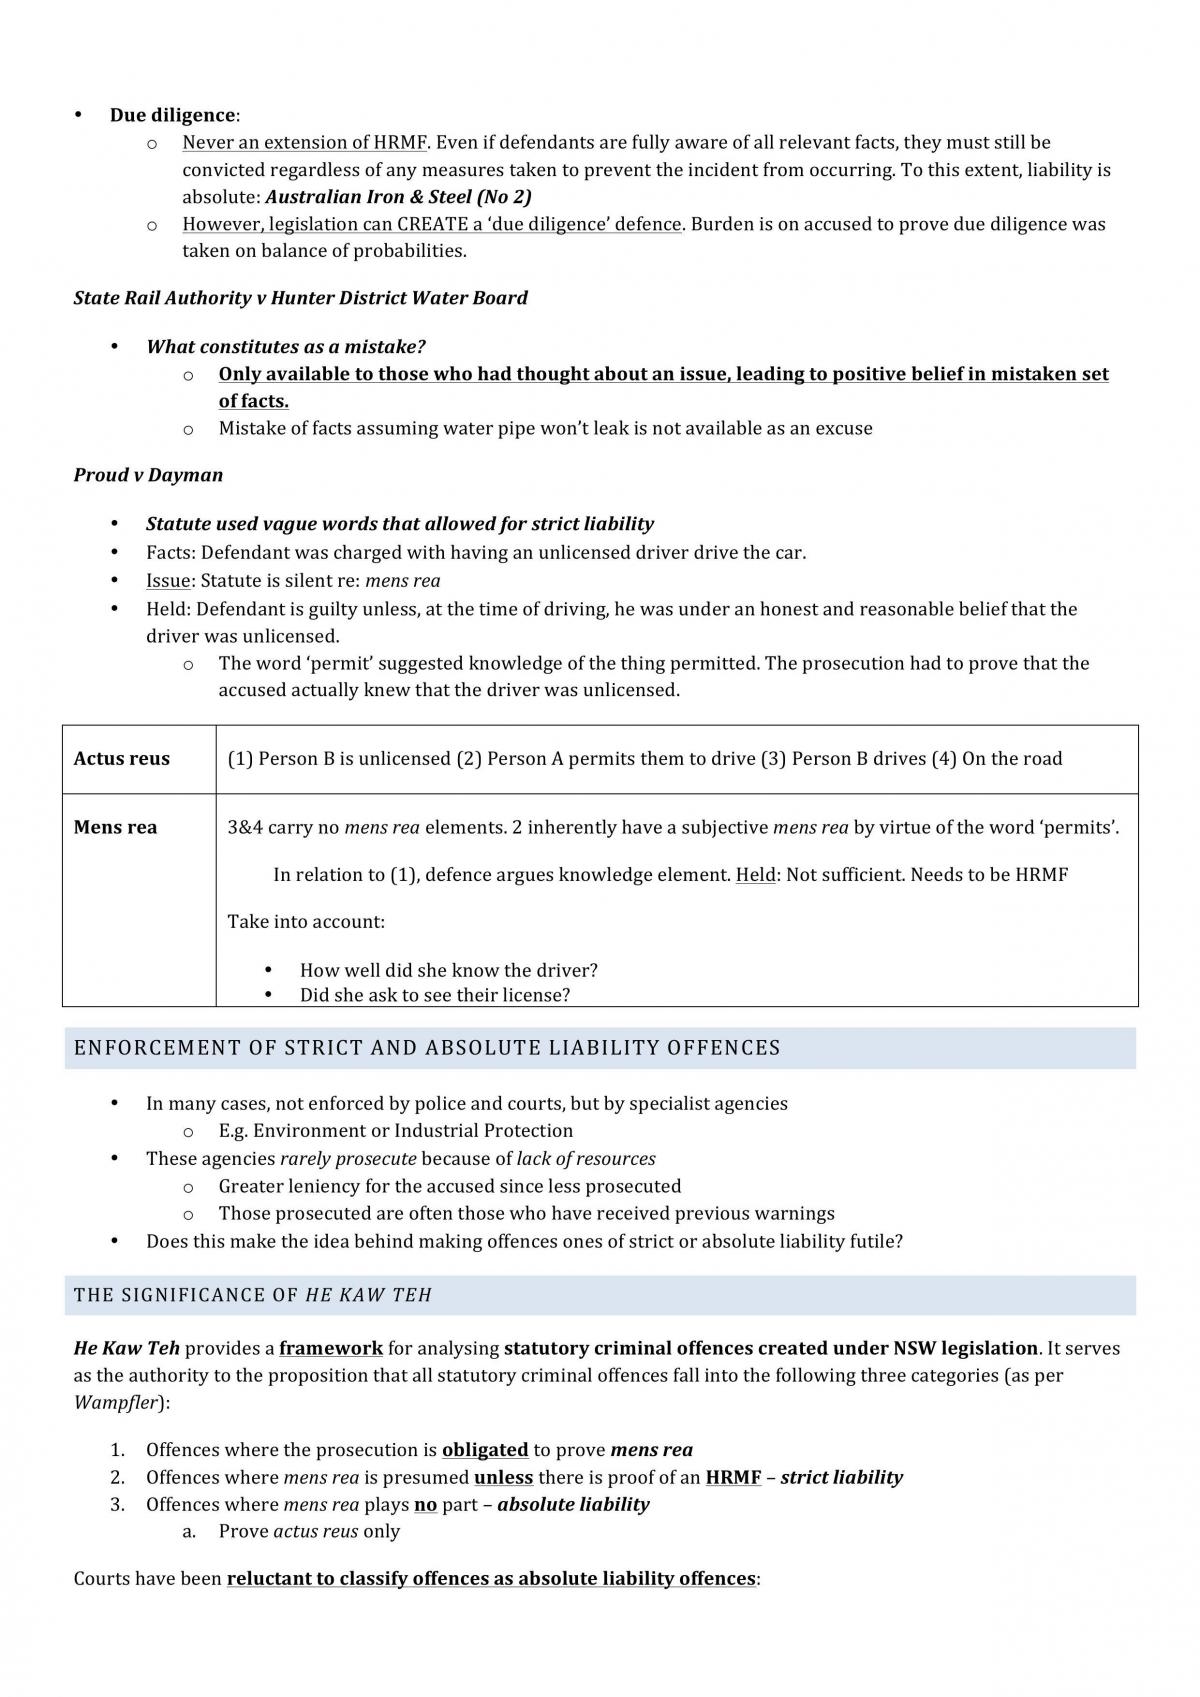 LAWS1021: Problem Question Frameworks - Page 27